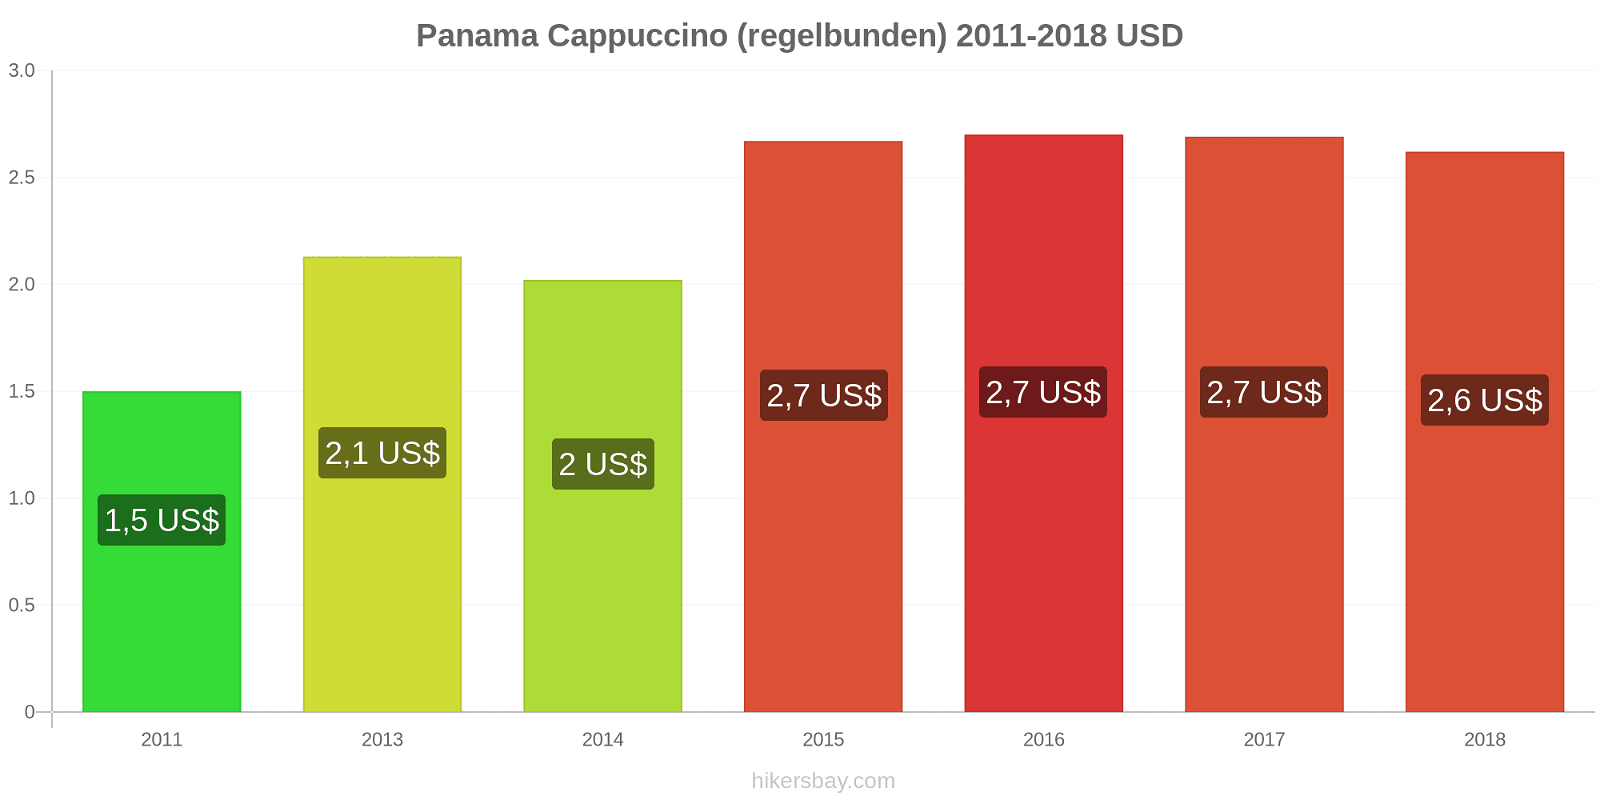 Panama prisändringar Cappuccino hikersbay.com